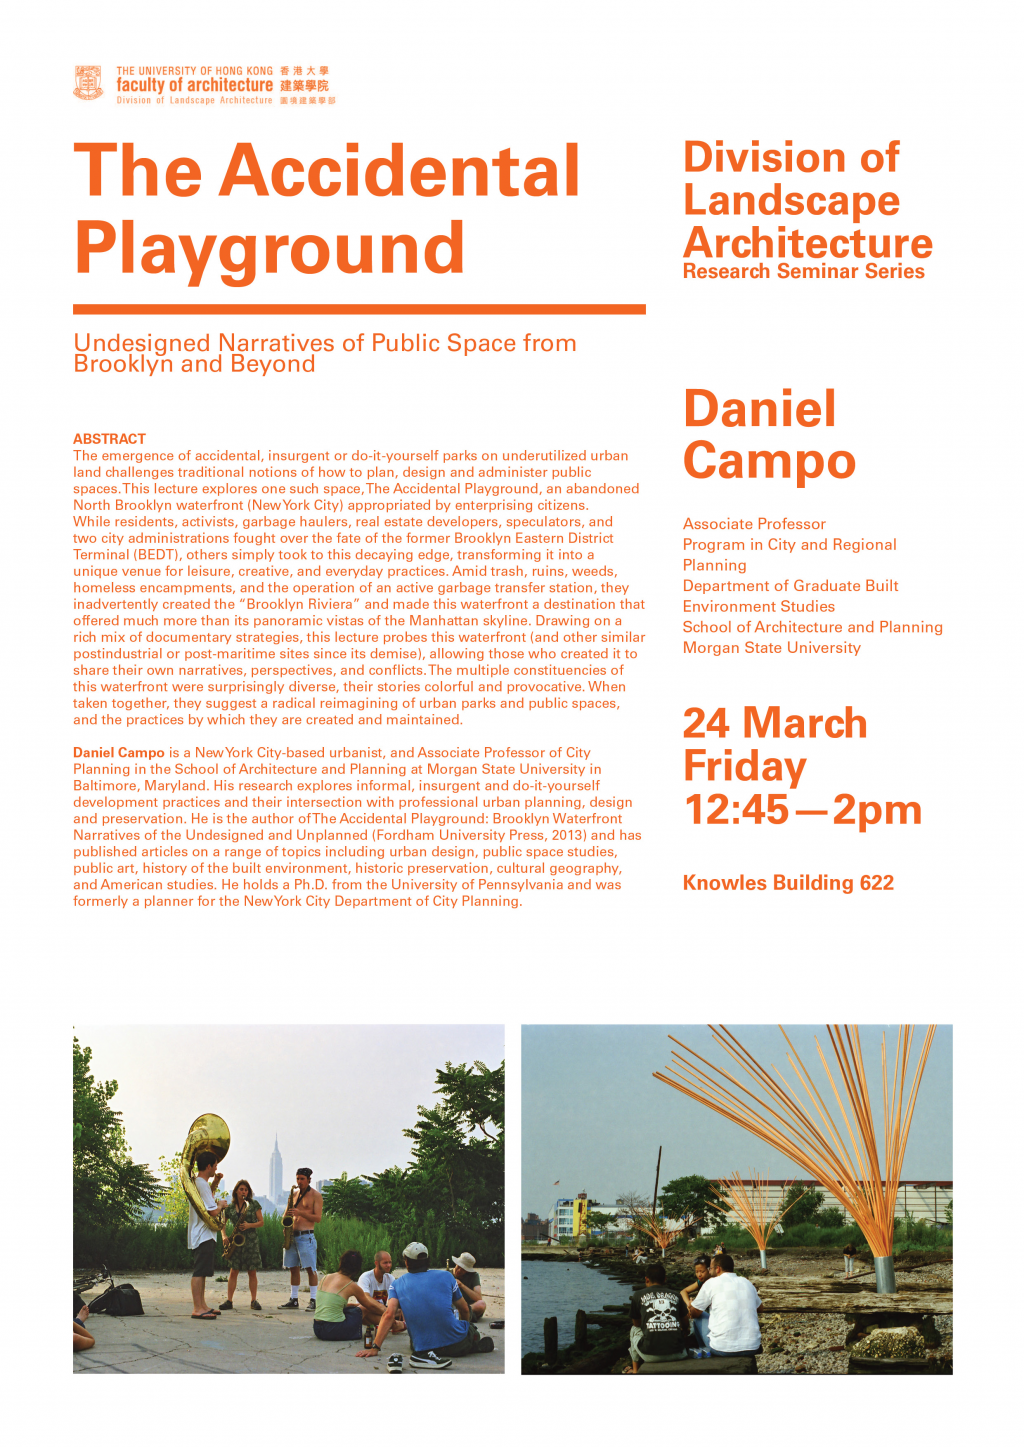 Division of Landscape Architecture Research Seminar Series